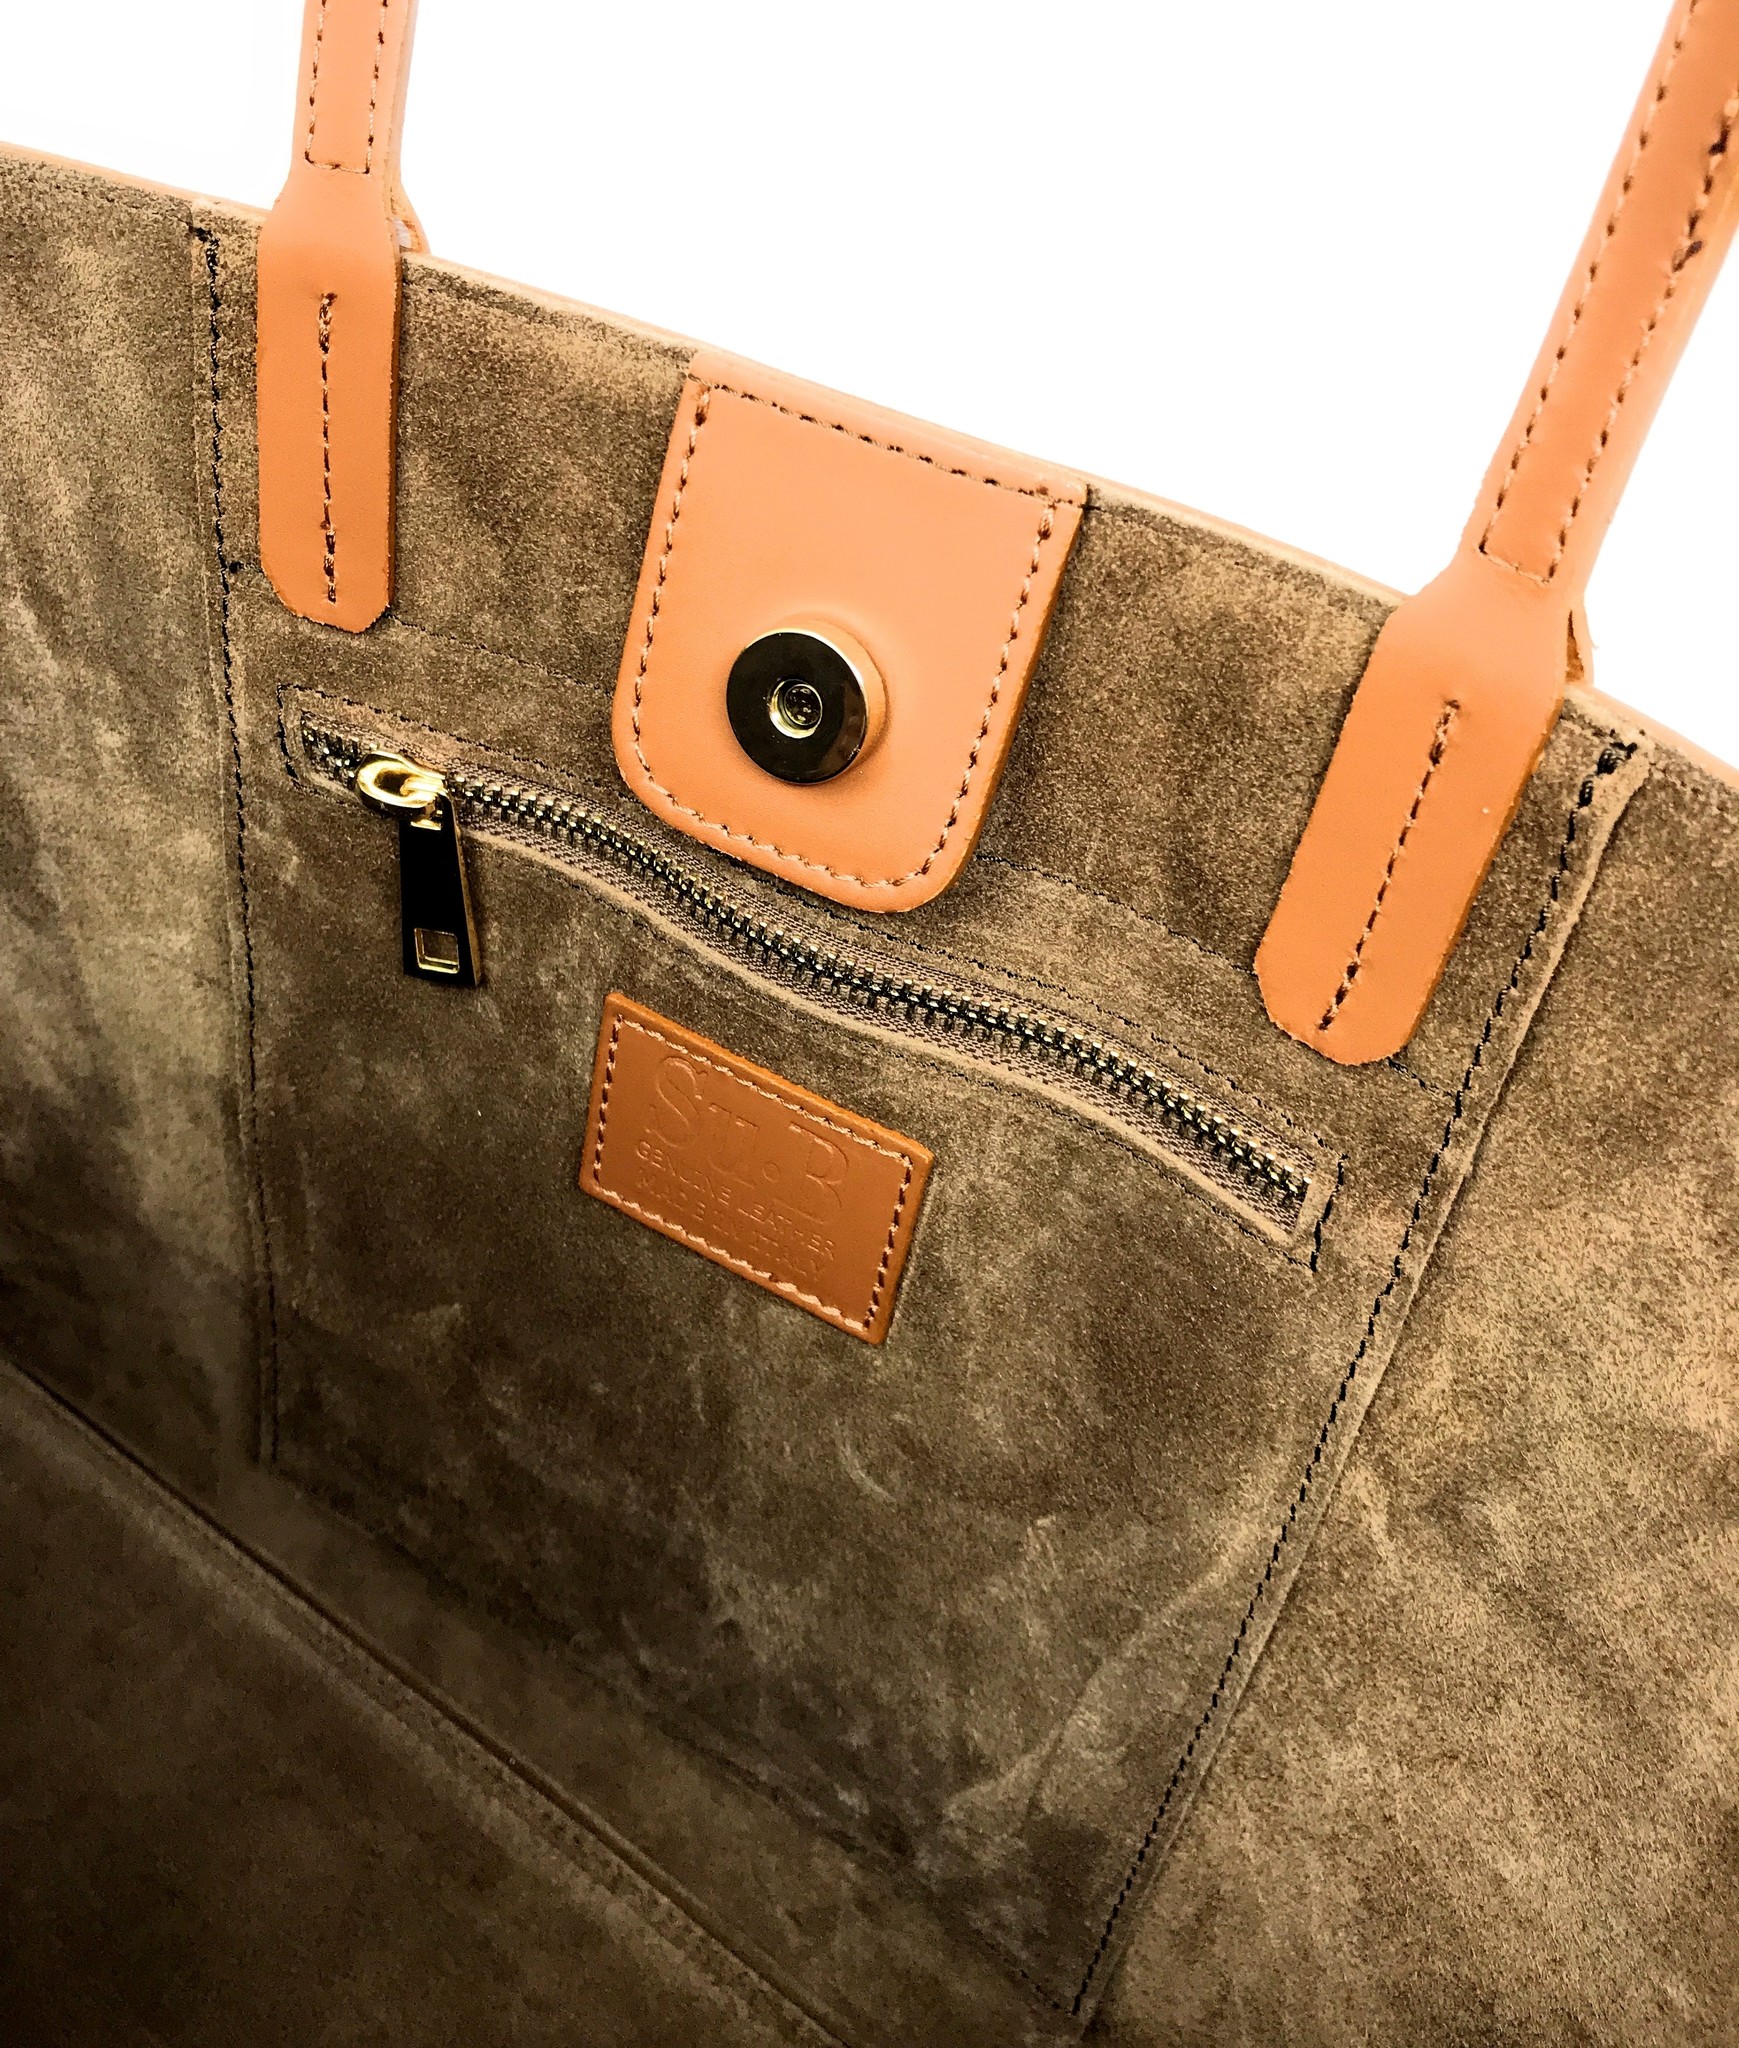 Luxurious Shopper for Women - Large Shoulder Bag Handbag - Tote Ladies Hobo Bag - Leather -Brown-10